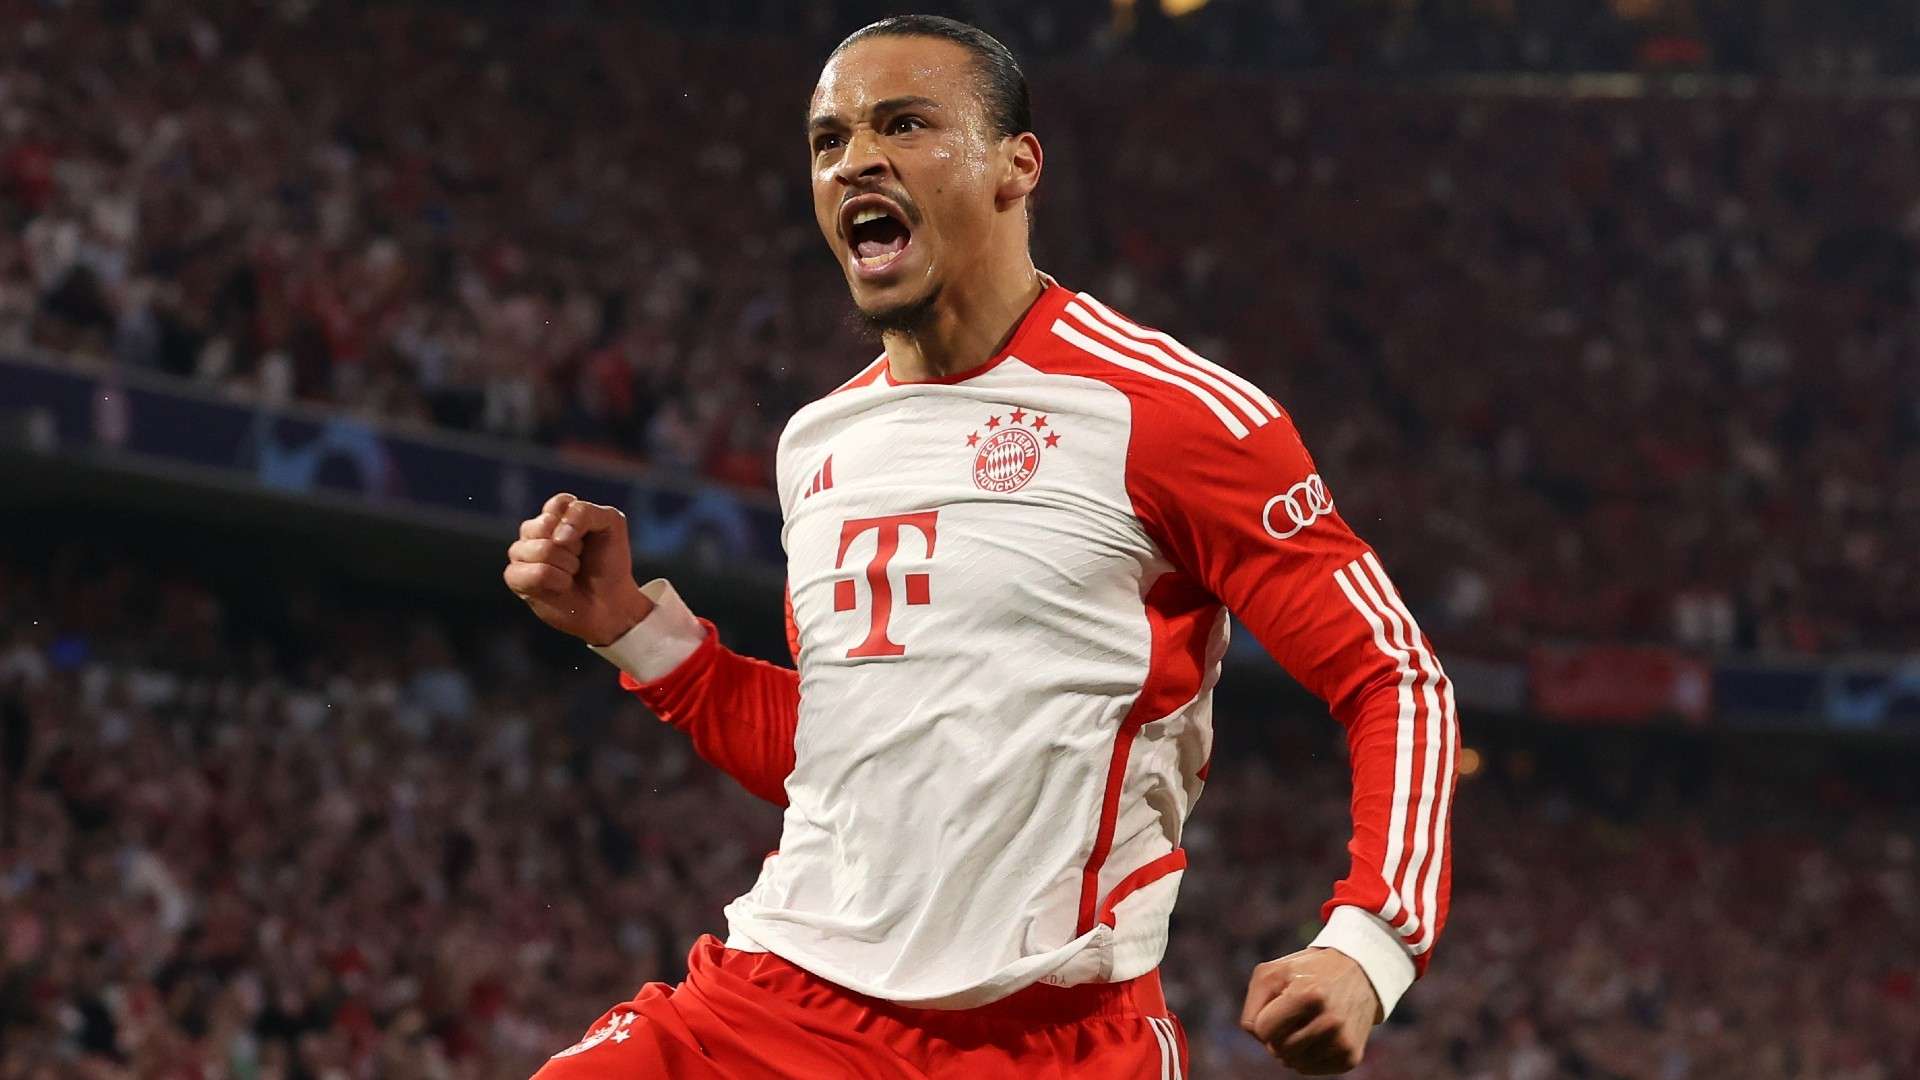 Leroy Sane of Bayern Munich celebrates scoring